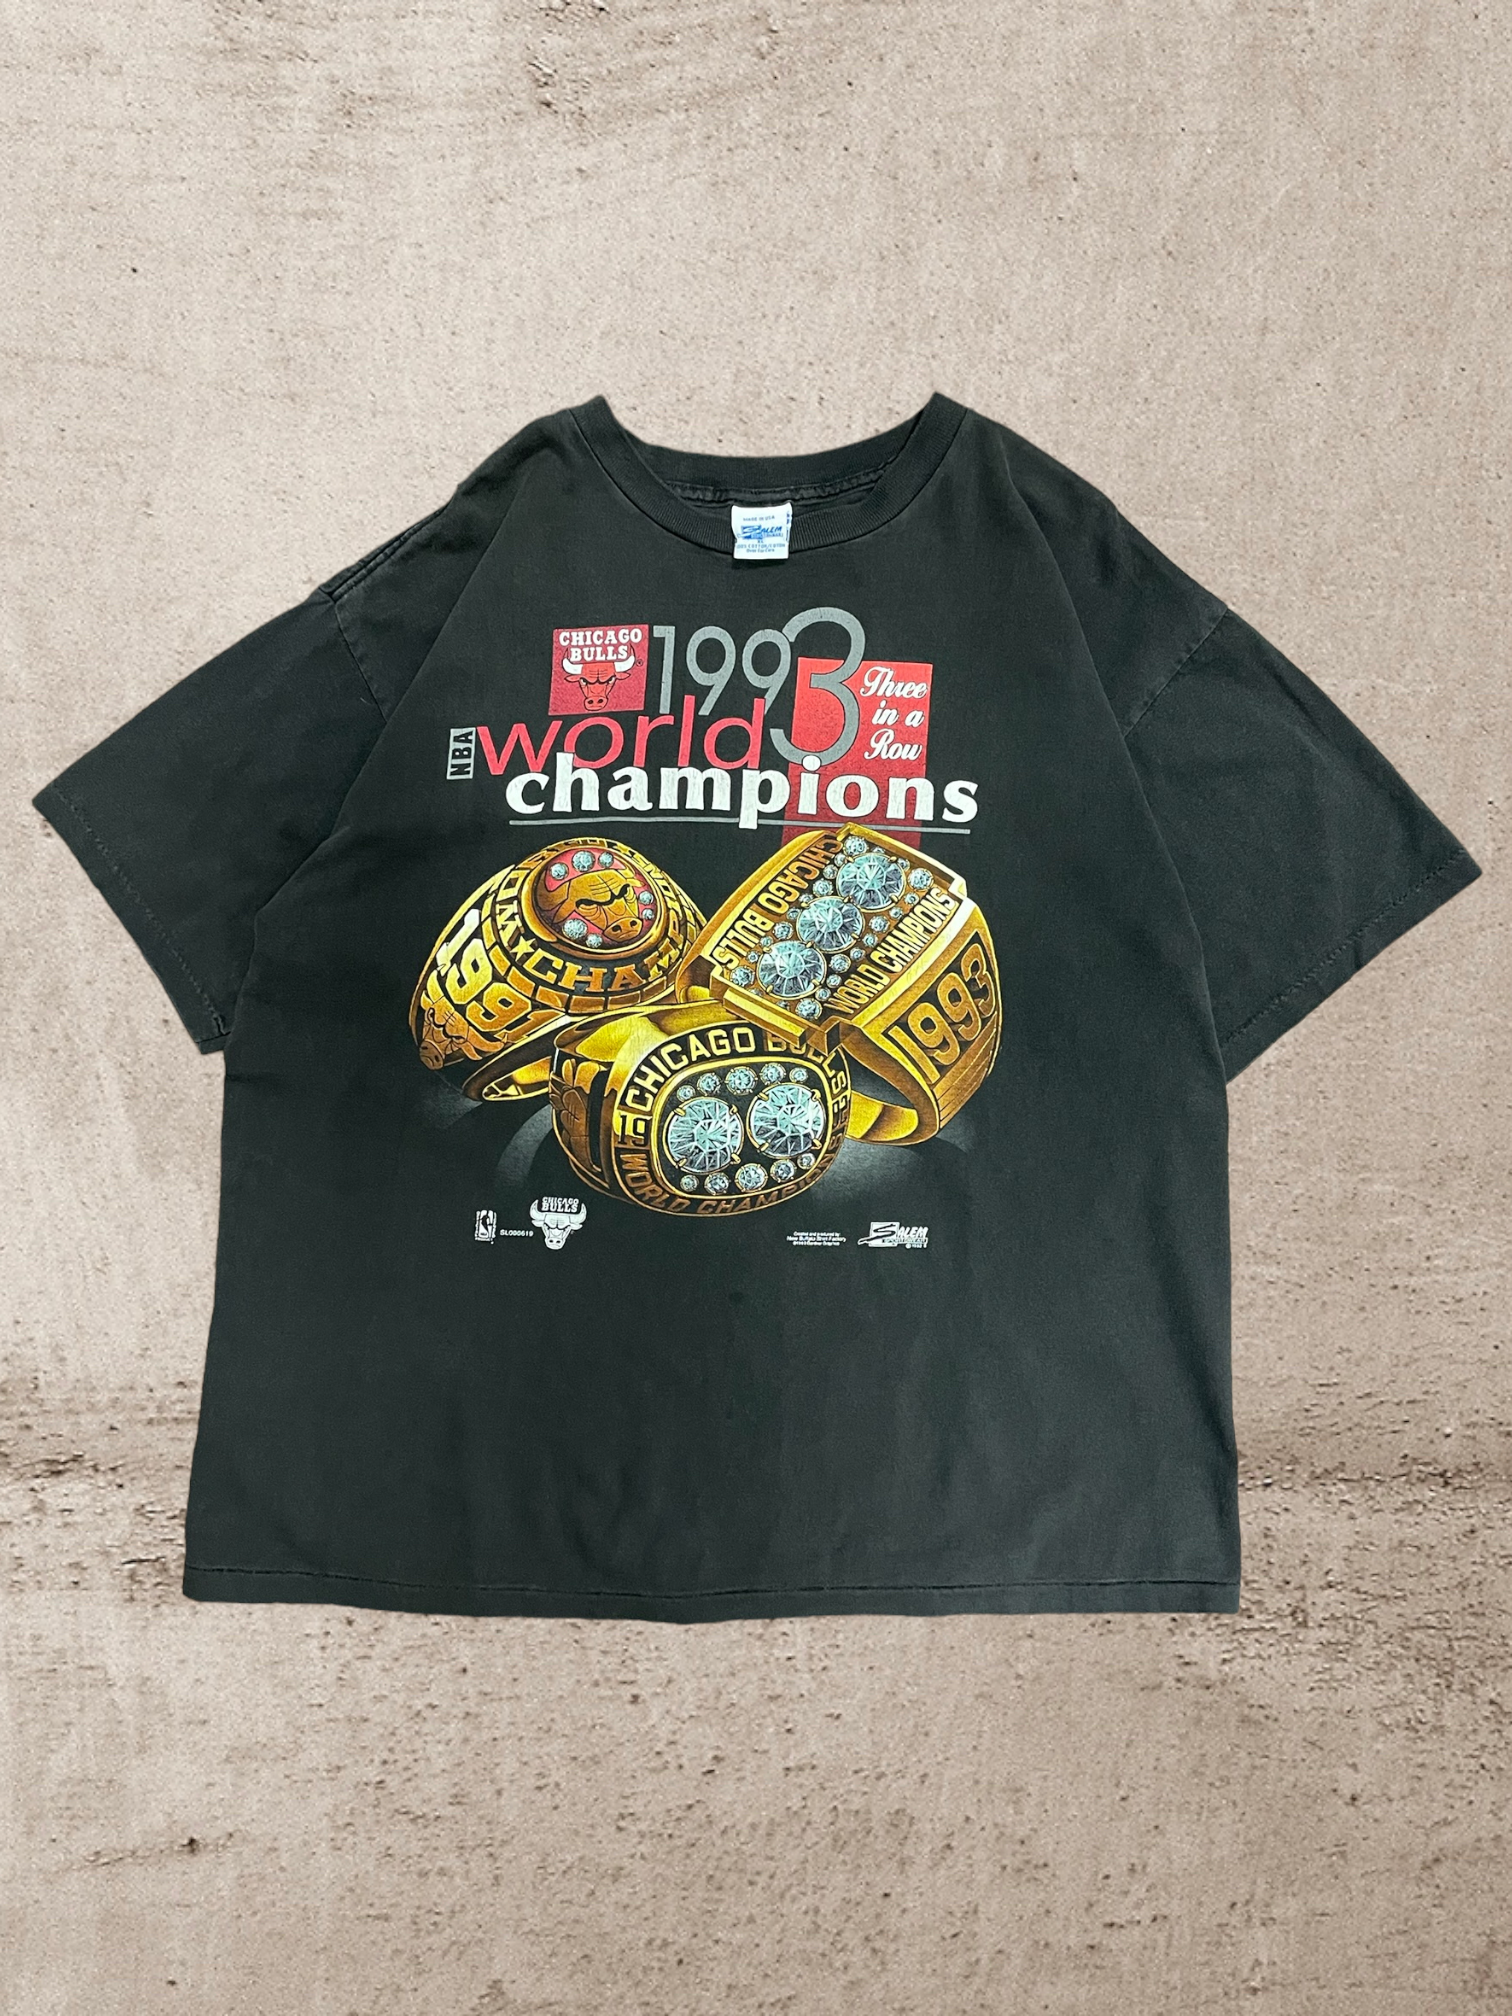 1993 Chicago Bulls Championship T-Shirt - X-Large